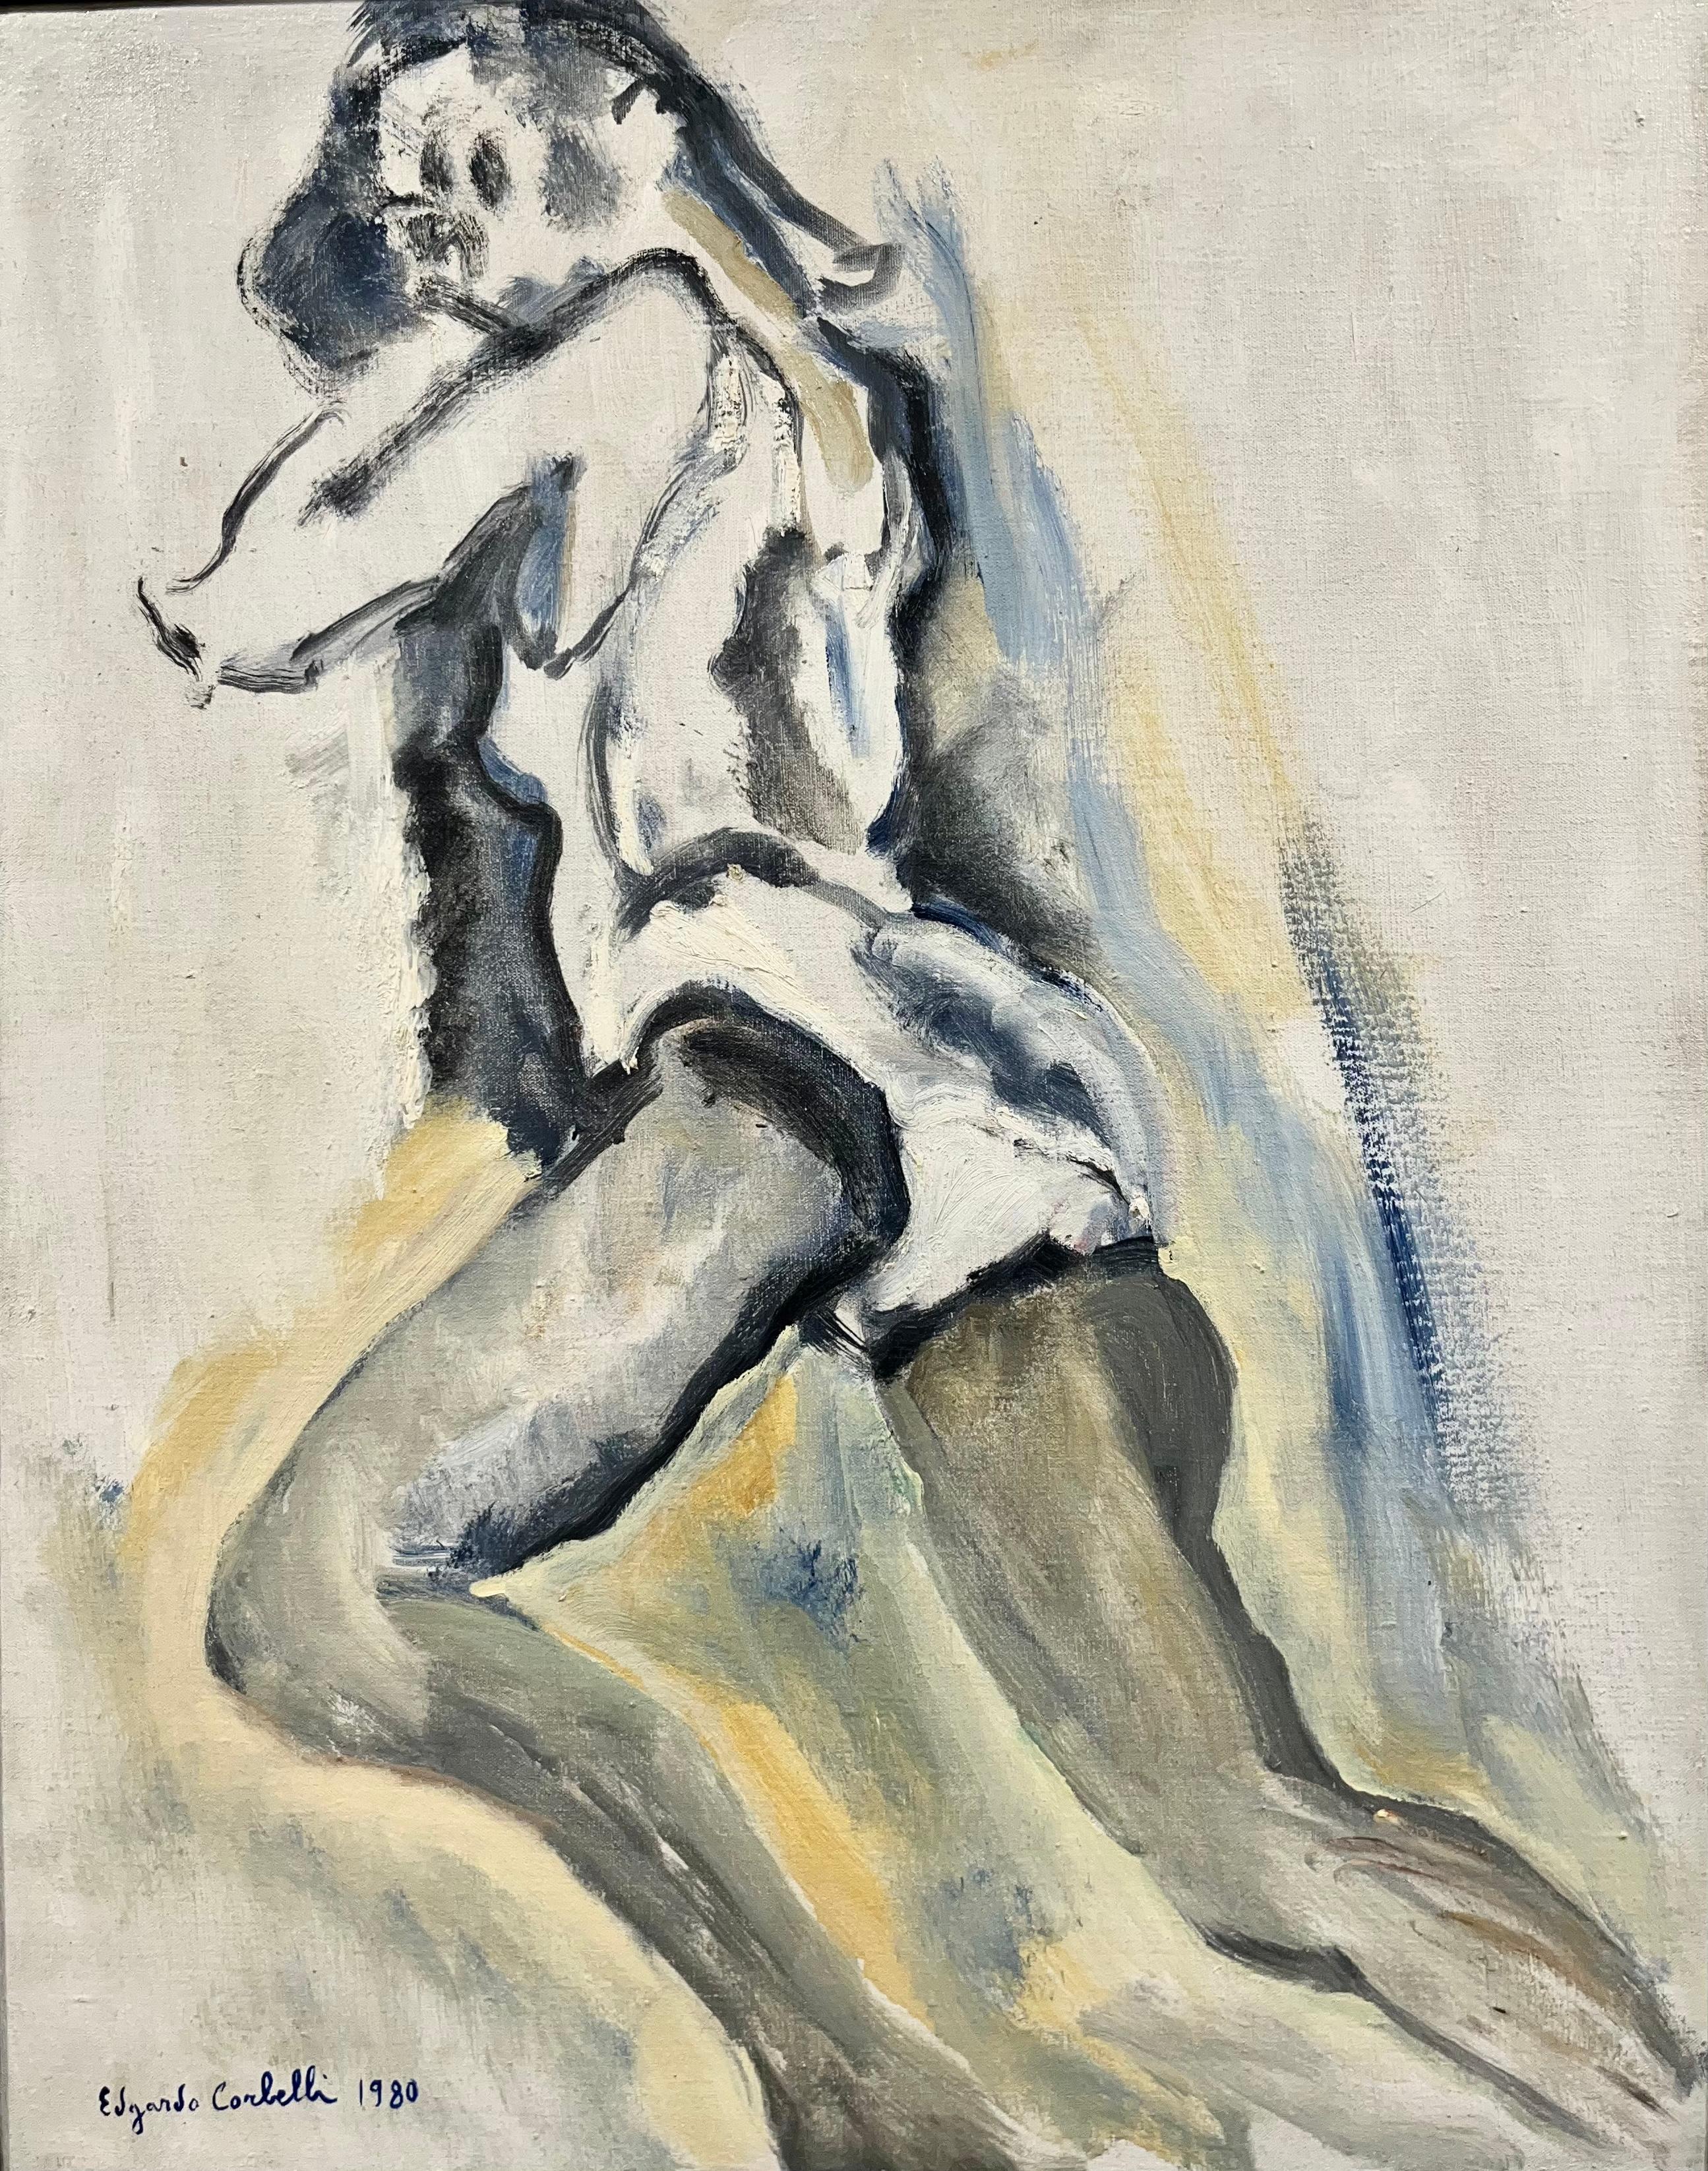 Weißes Modell, Öl, cm 73 x 92, 1980